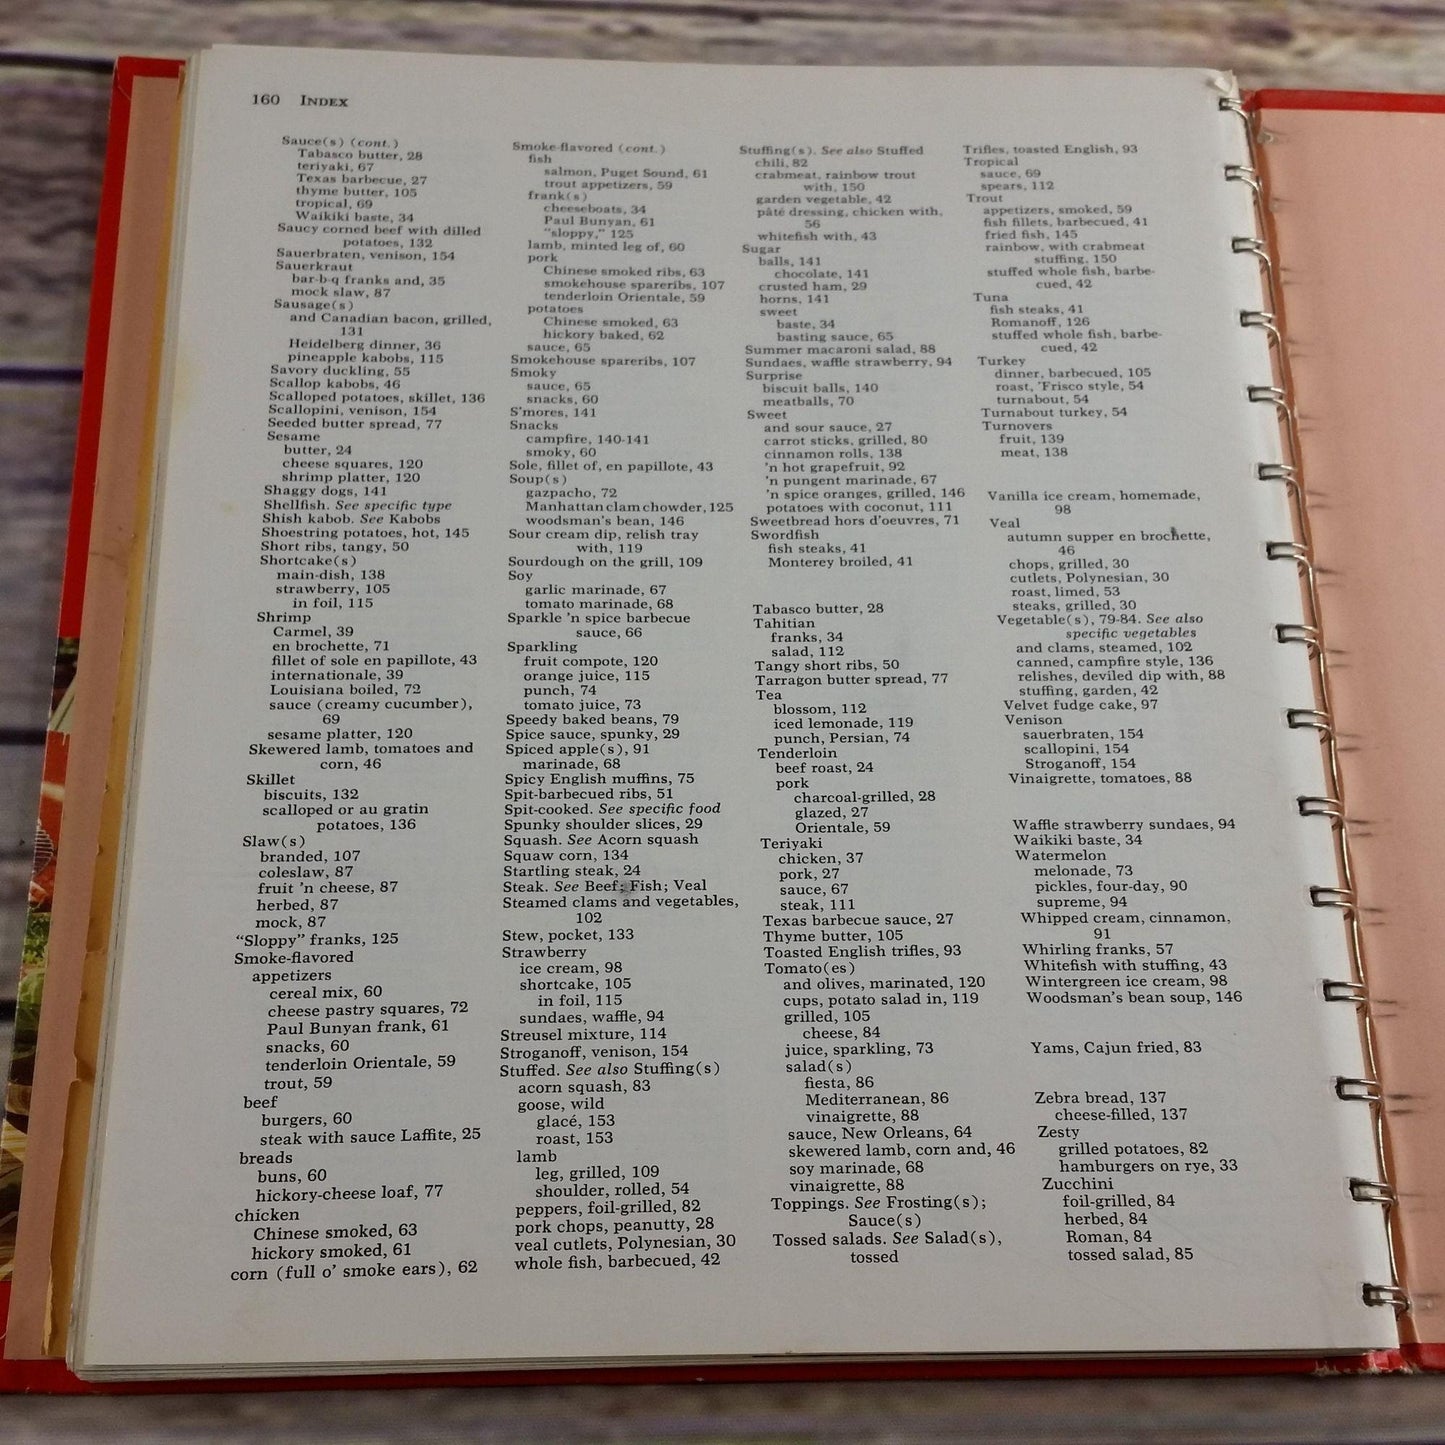 Vintage Cookbook Betty Crocker Outdoor Cookbook Barbecues 1967 Hardcover Spiral Bound 1st Edition 1st Printing Golden Press